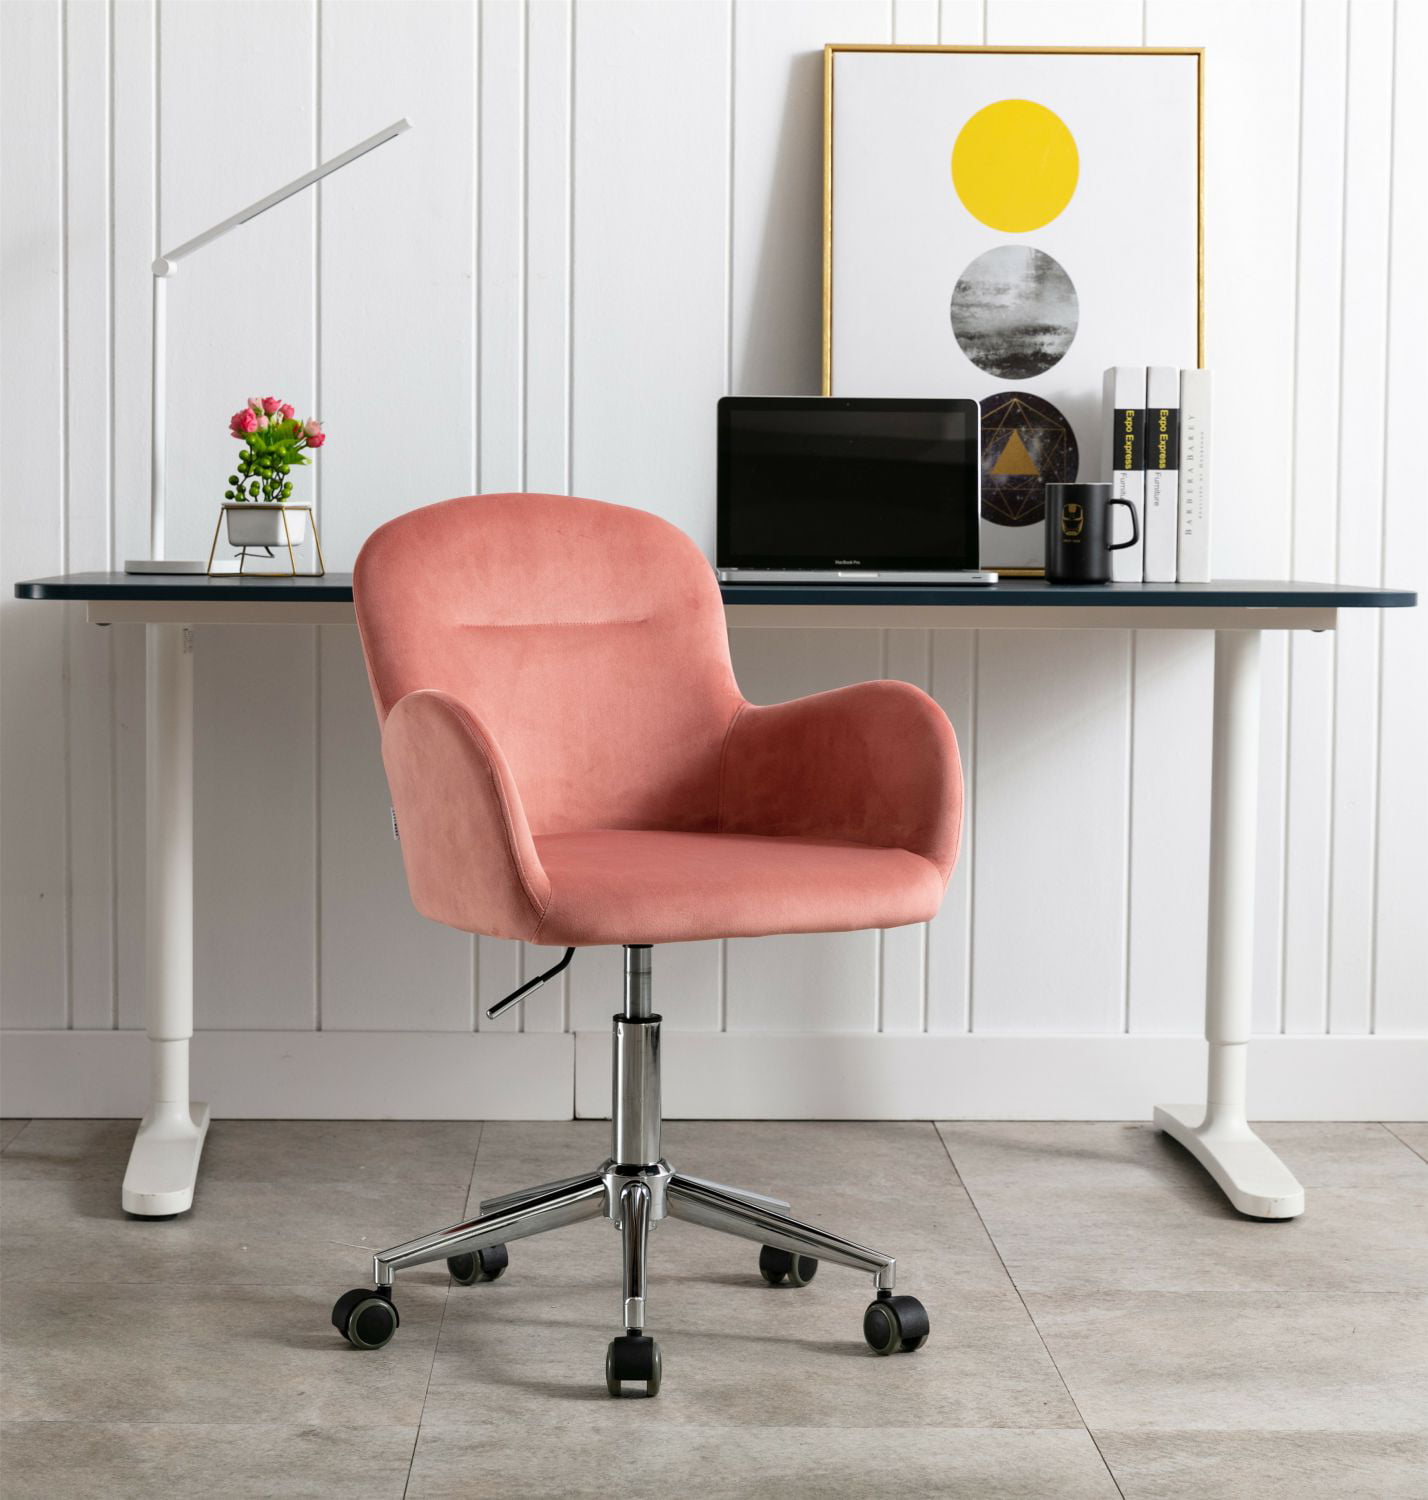 Ergonomic Office Velvet Chair with Wheels, Home Office Executive Desk Chair Modern Pink Living